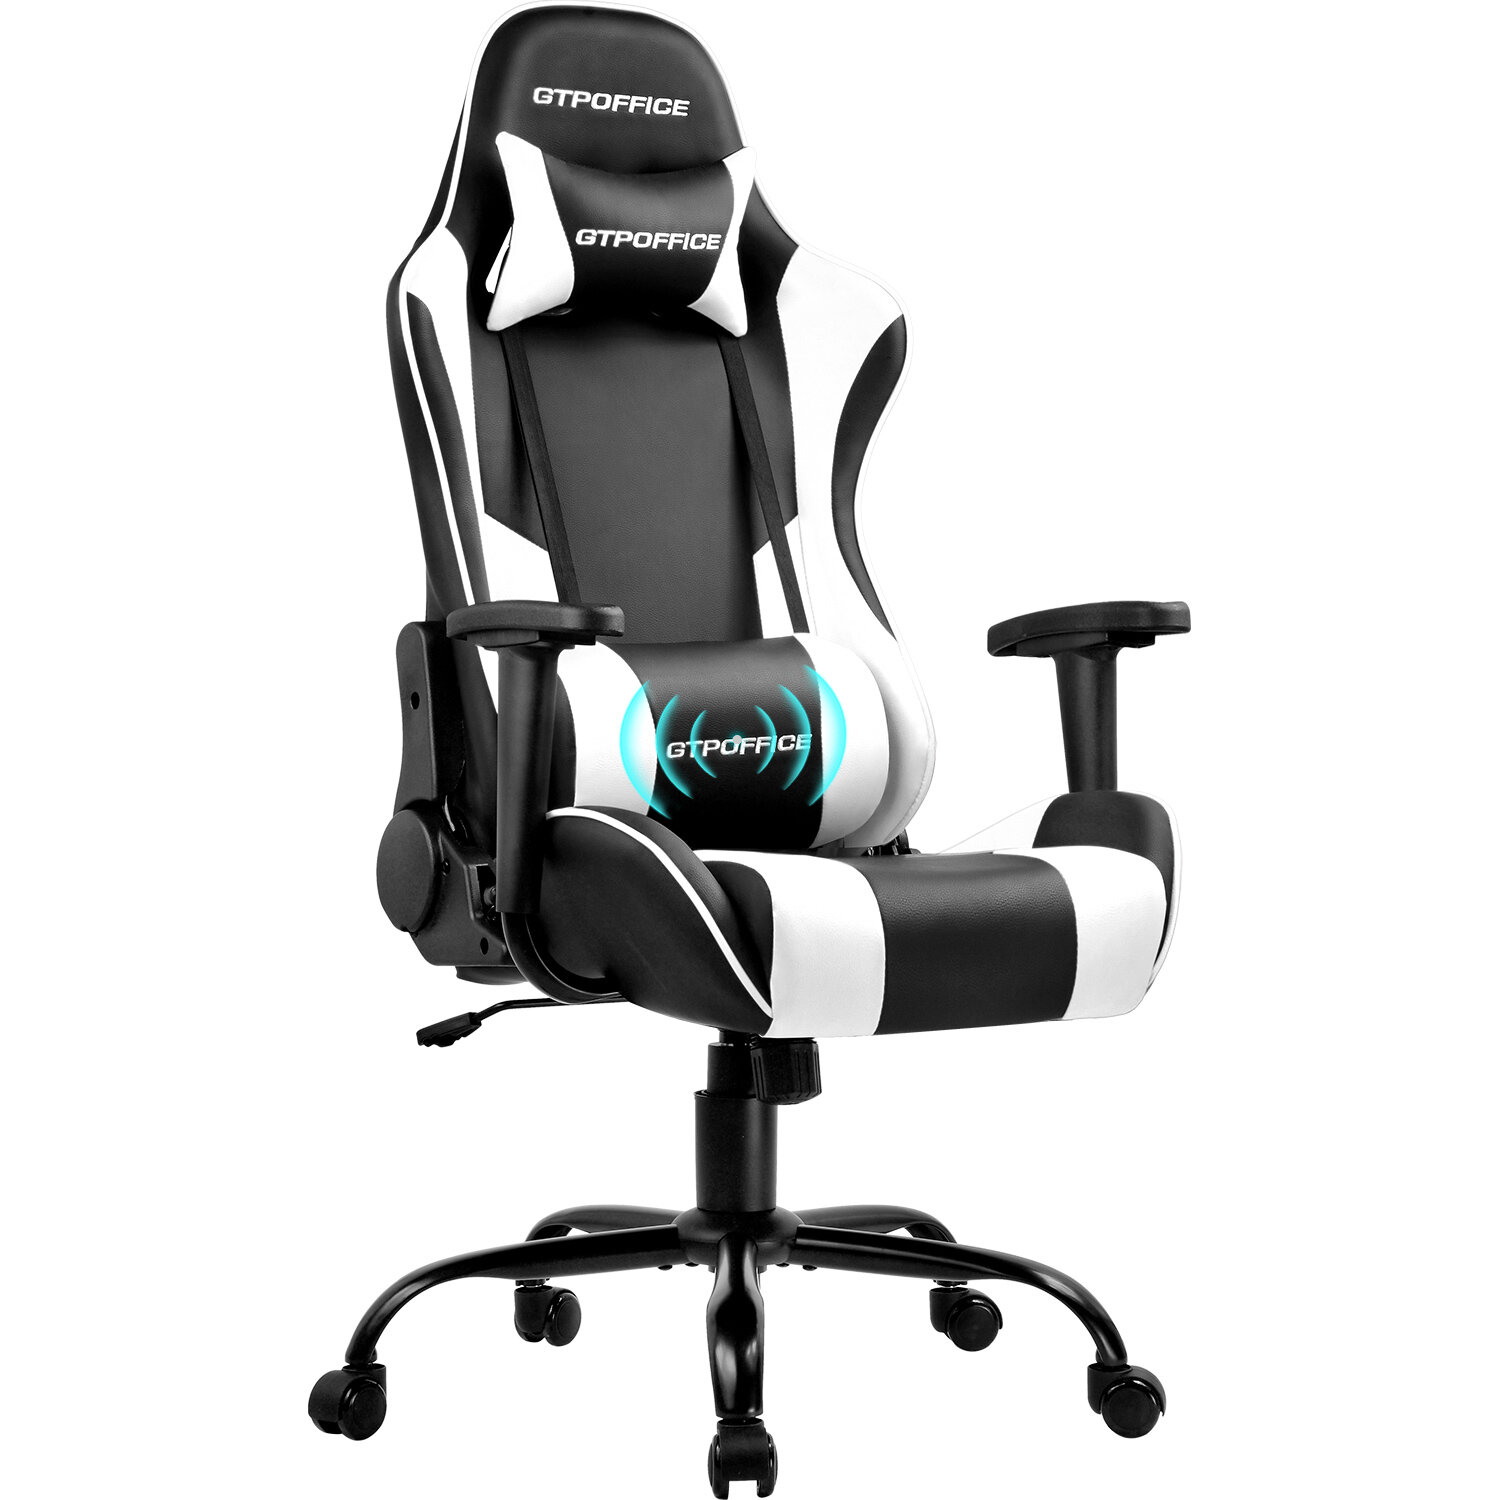 Gtracing Ergonomic Gaming Chair With Massage Reviews Wayfair